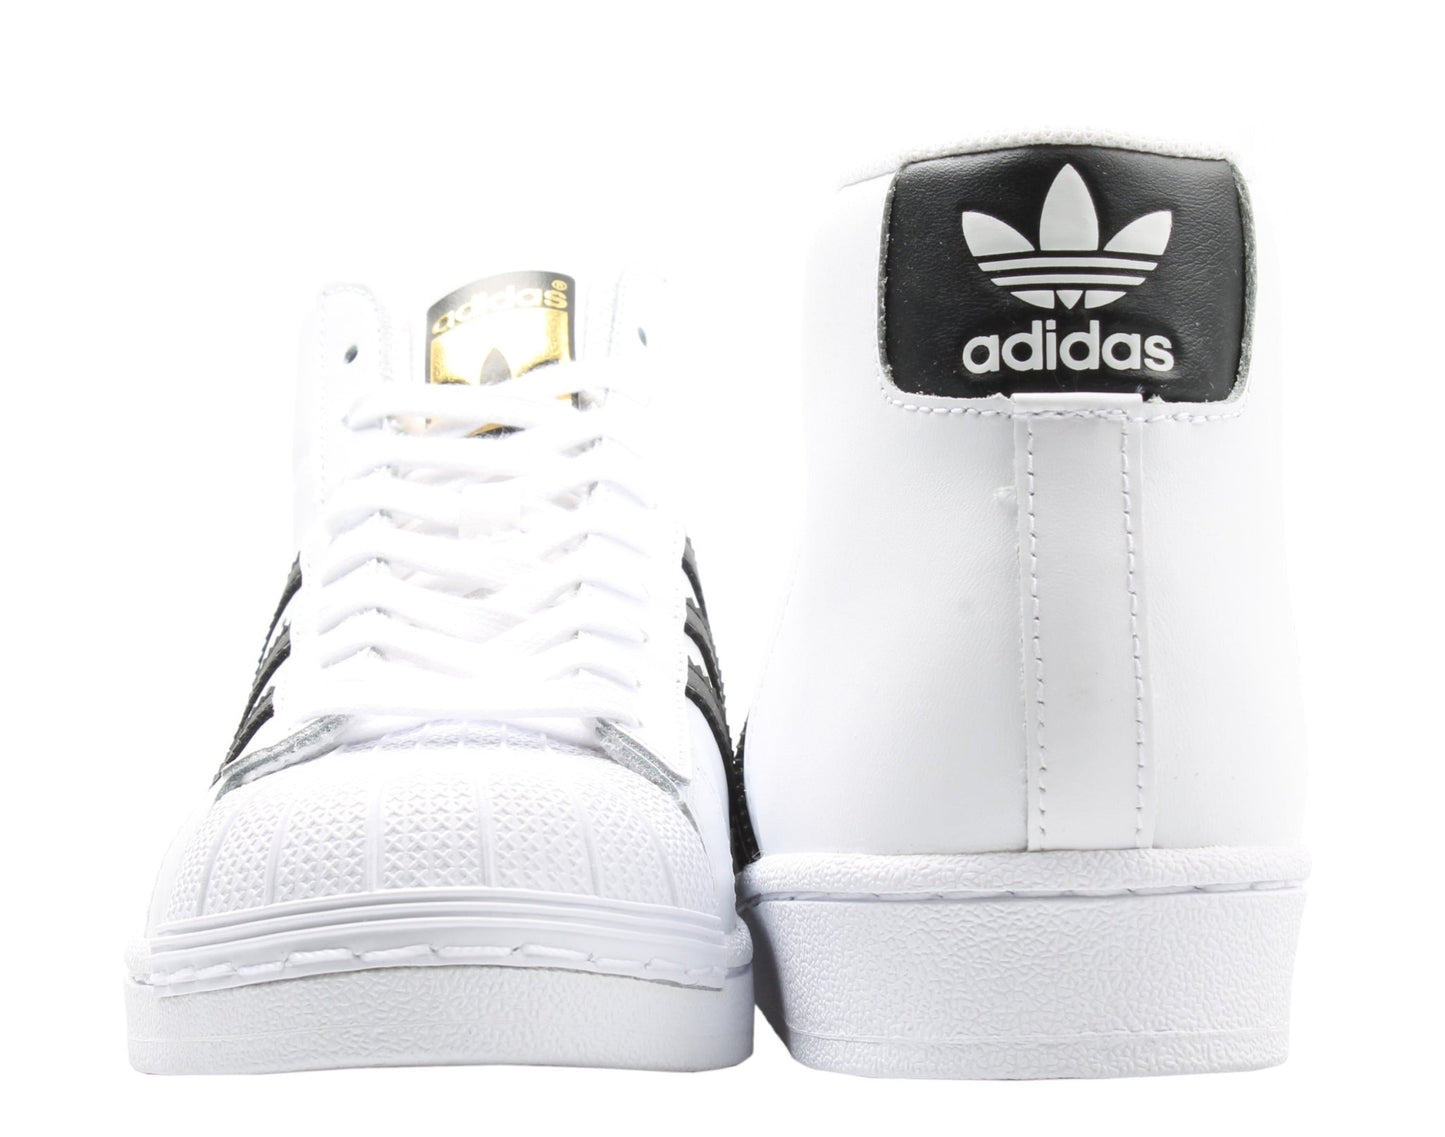 Adidas Originals Pro Model J OG White/Black Big Kids Basketball Shoes S85962 - Becauze